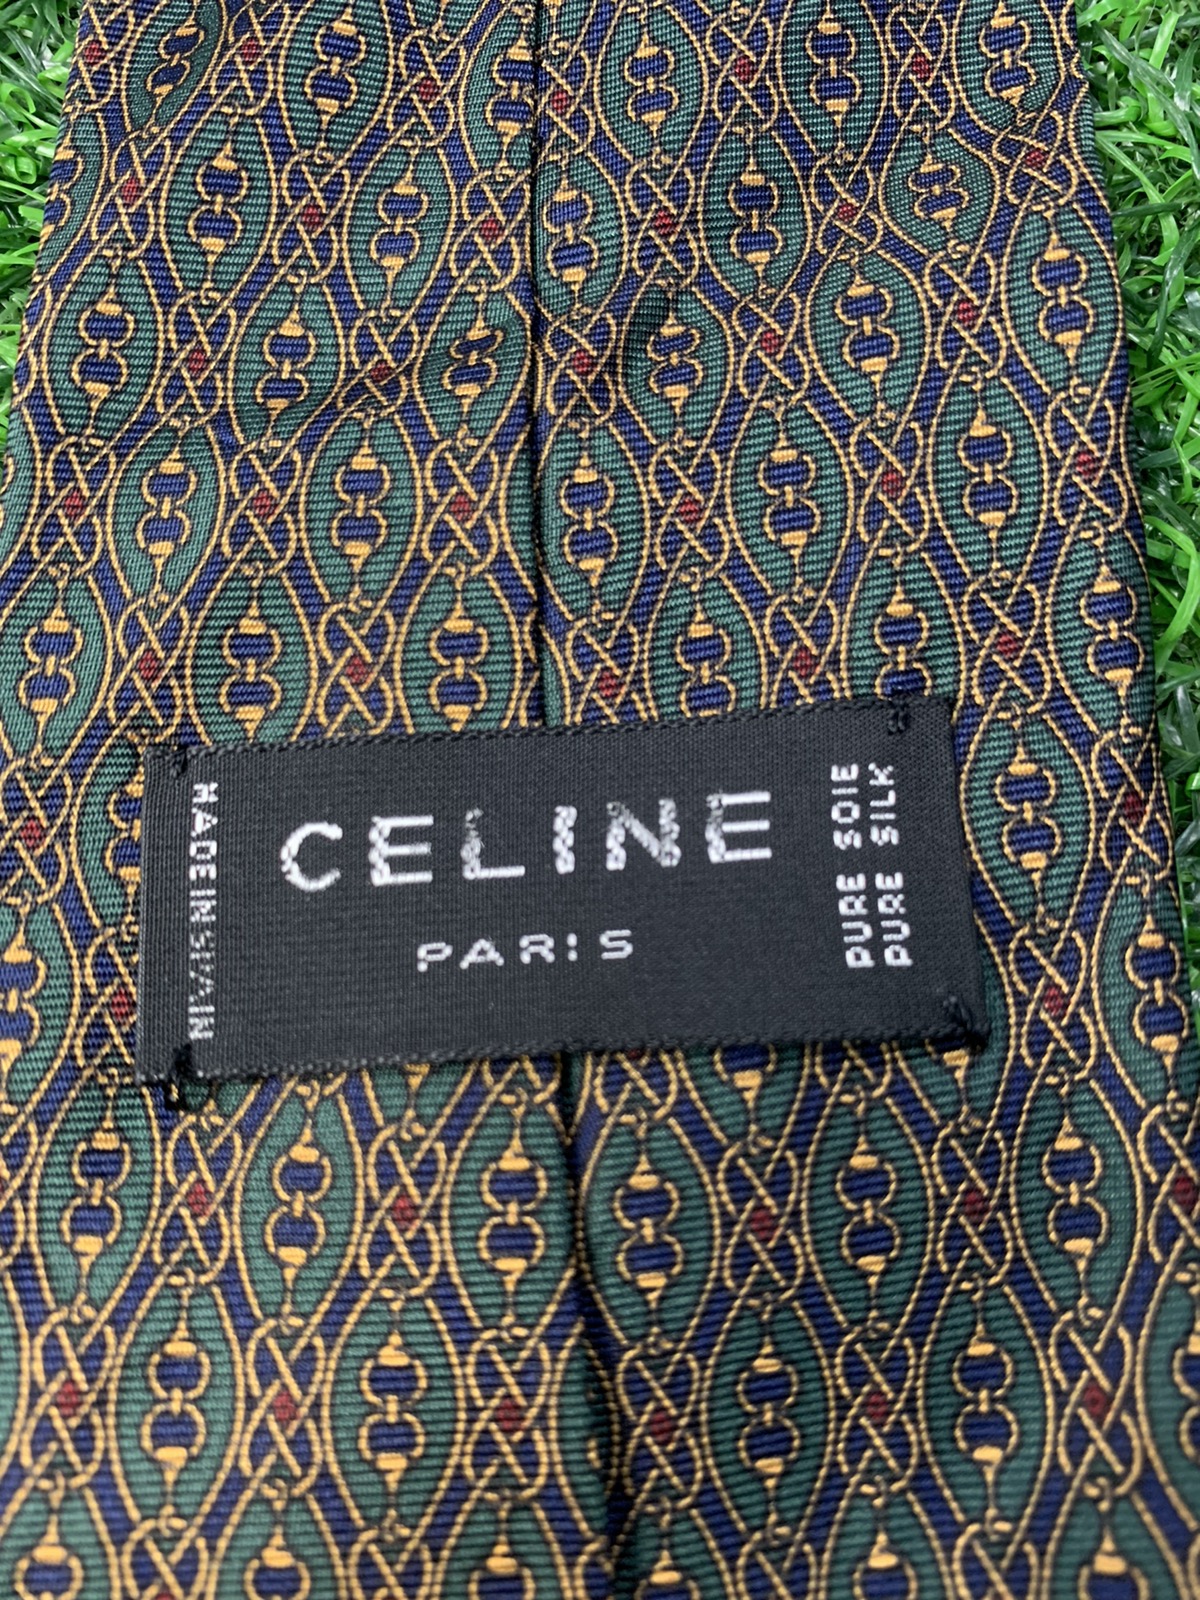 Celine Paris Made in Spain Neck Tie - 4